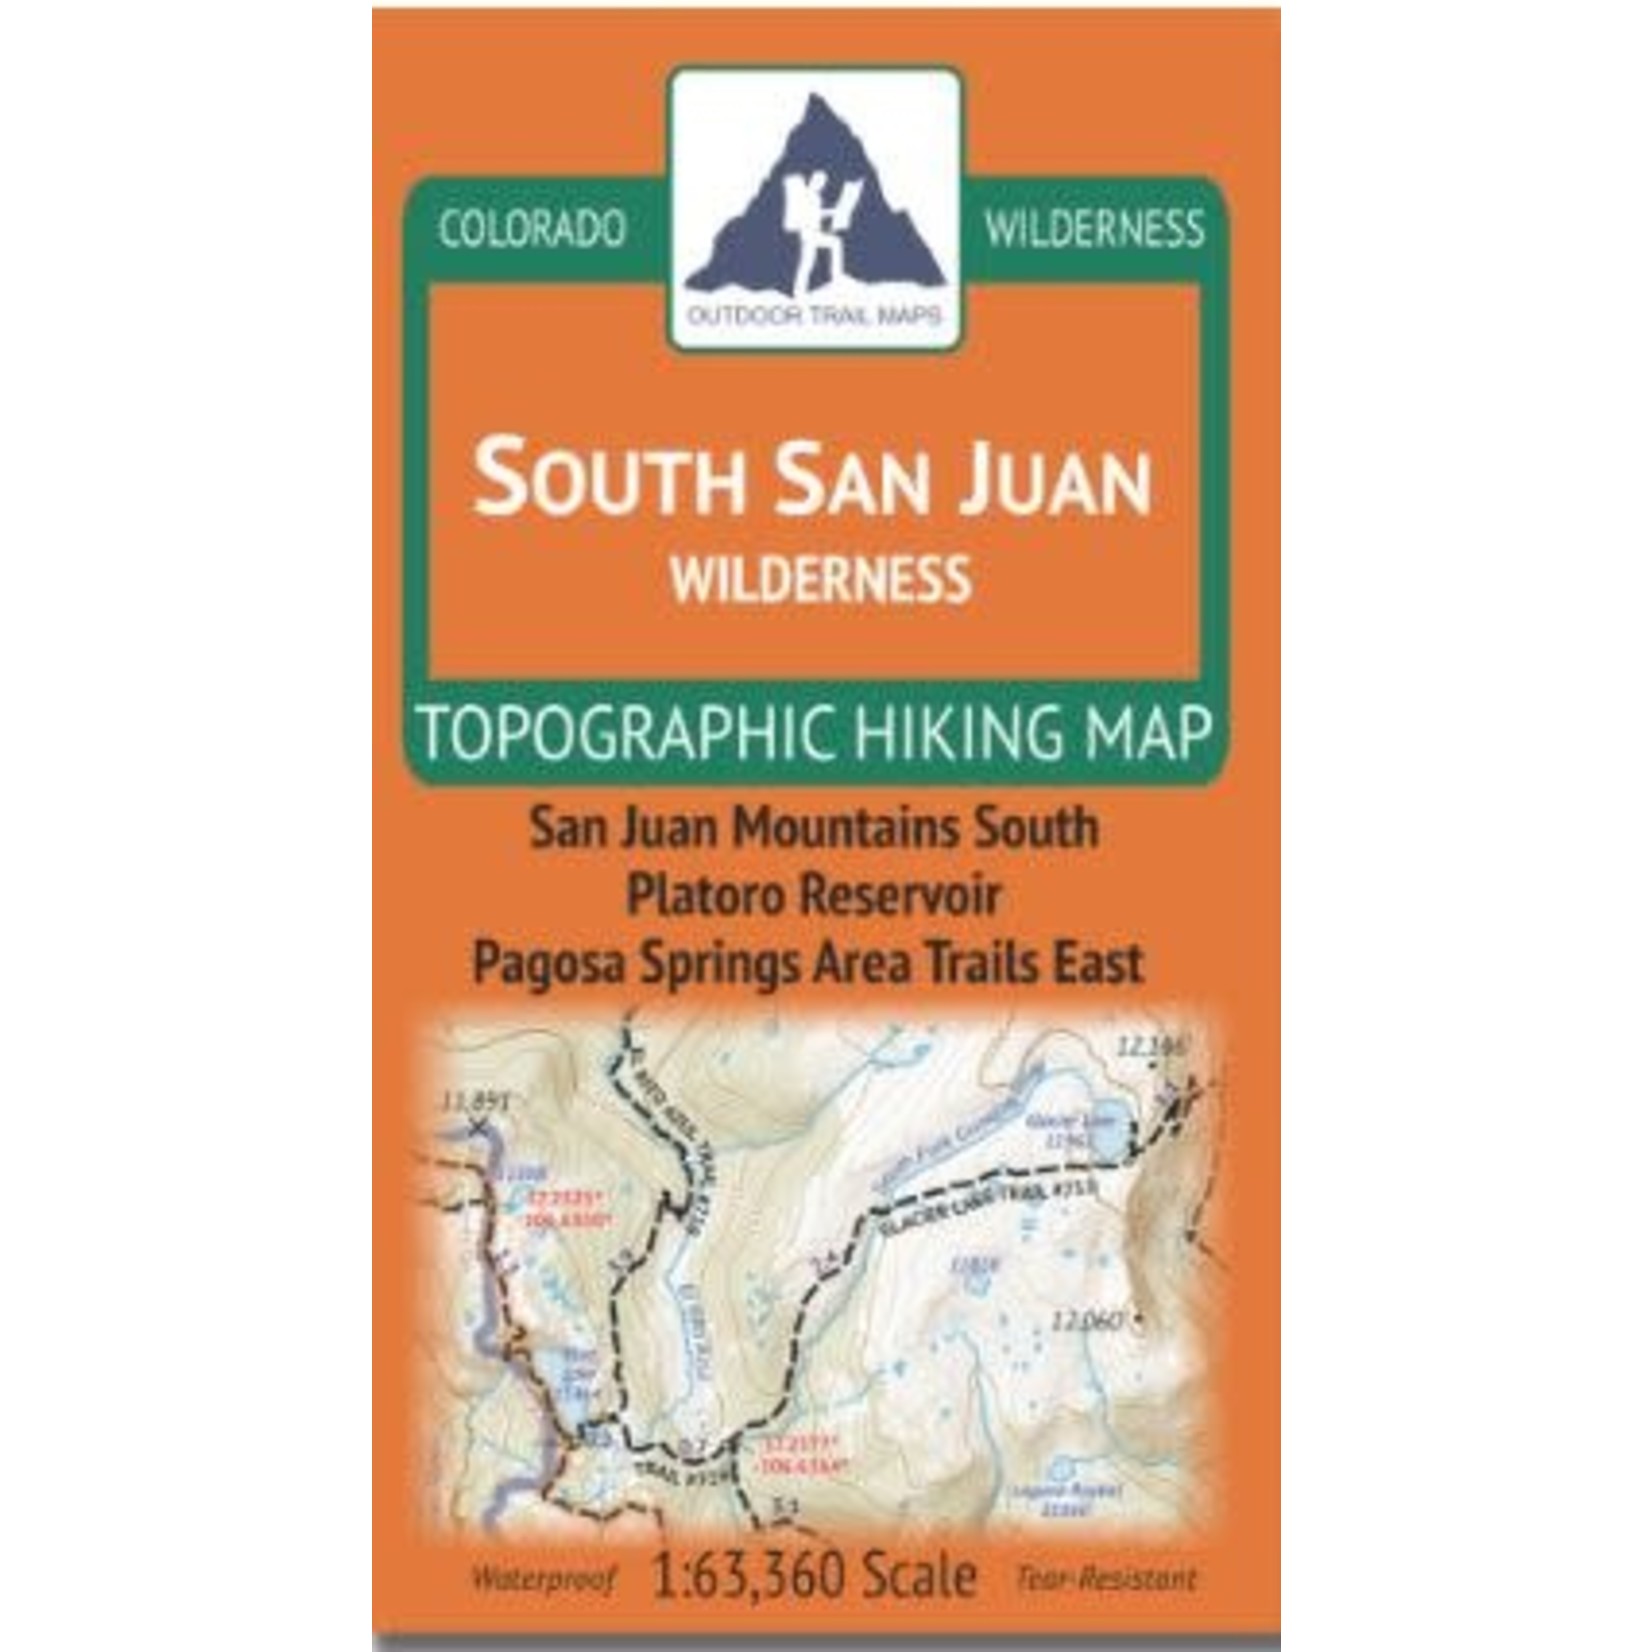 Outdoor Trail Maps  Colorado Wilderness South San Juan